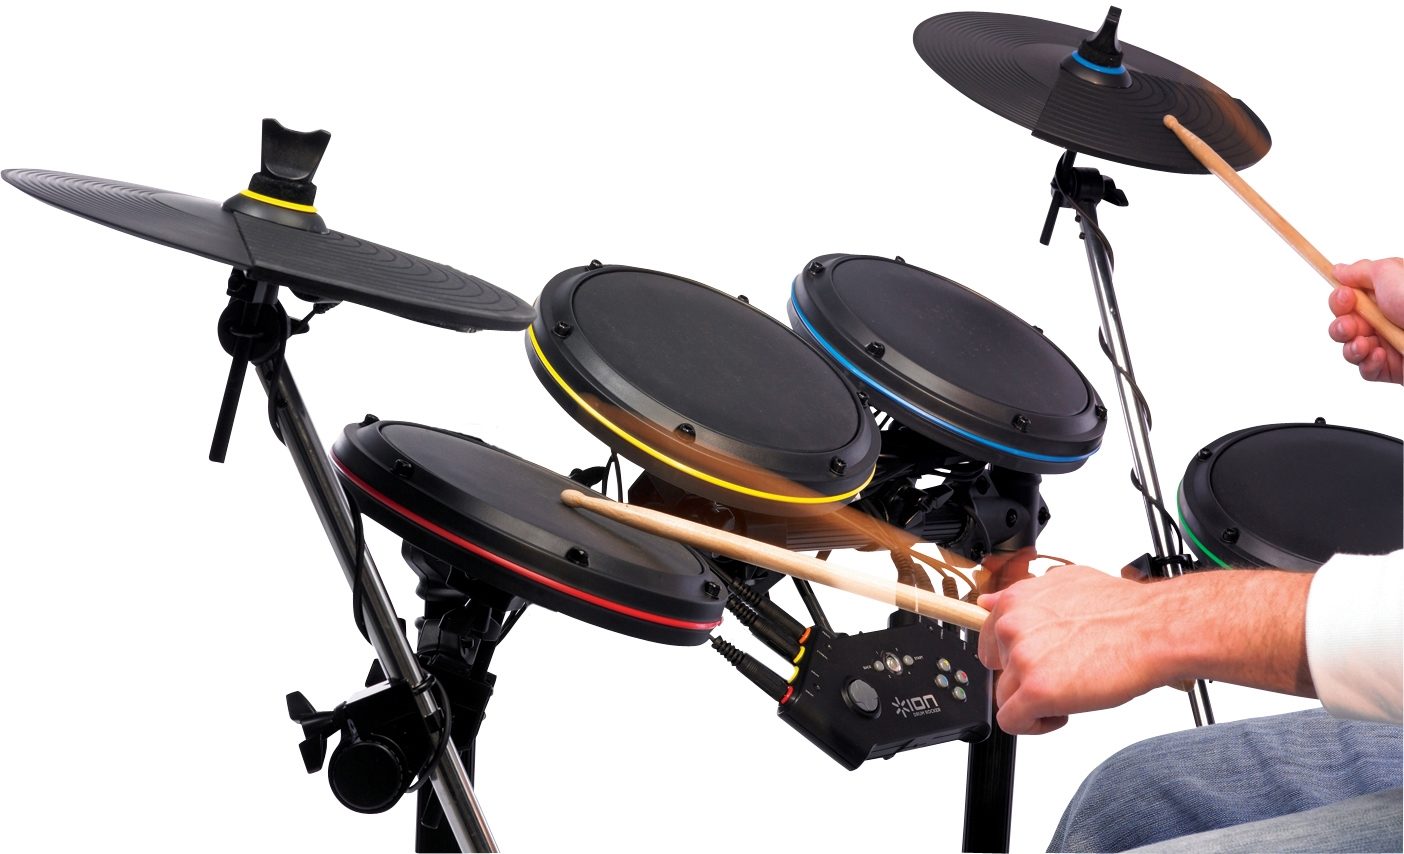 rijkdom labyrint knelpunt Ion Audio IED08 Drum Rocker Premium Drum | zZounds